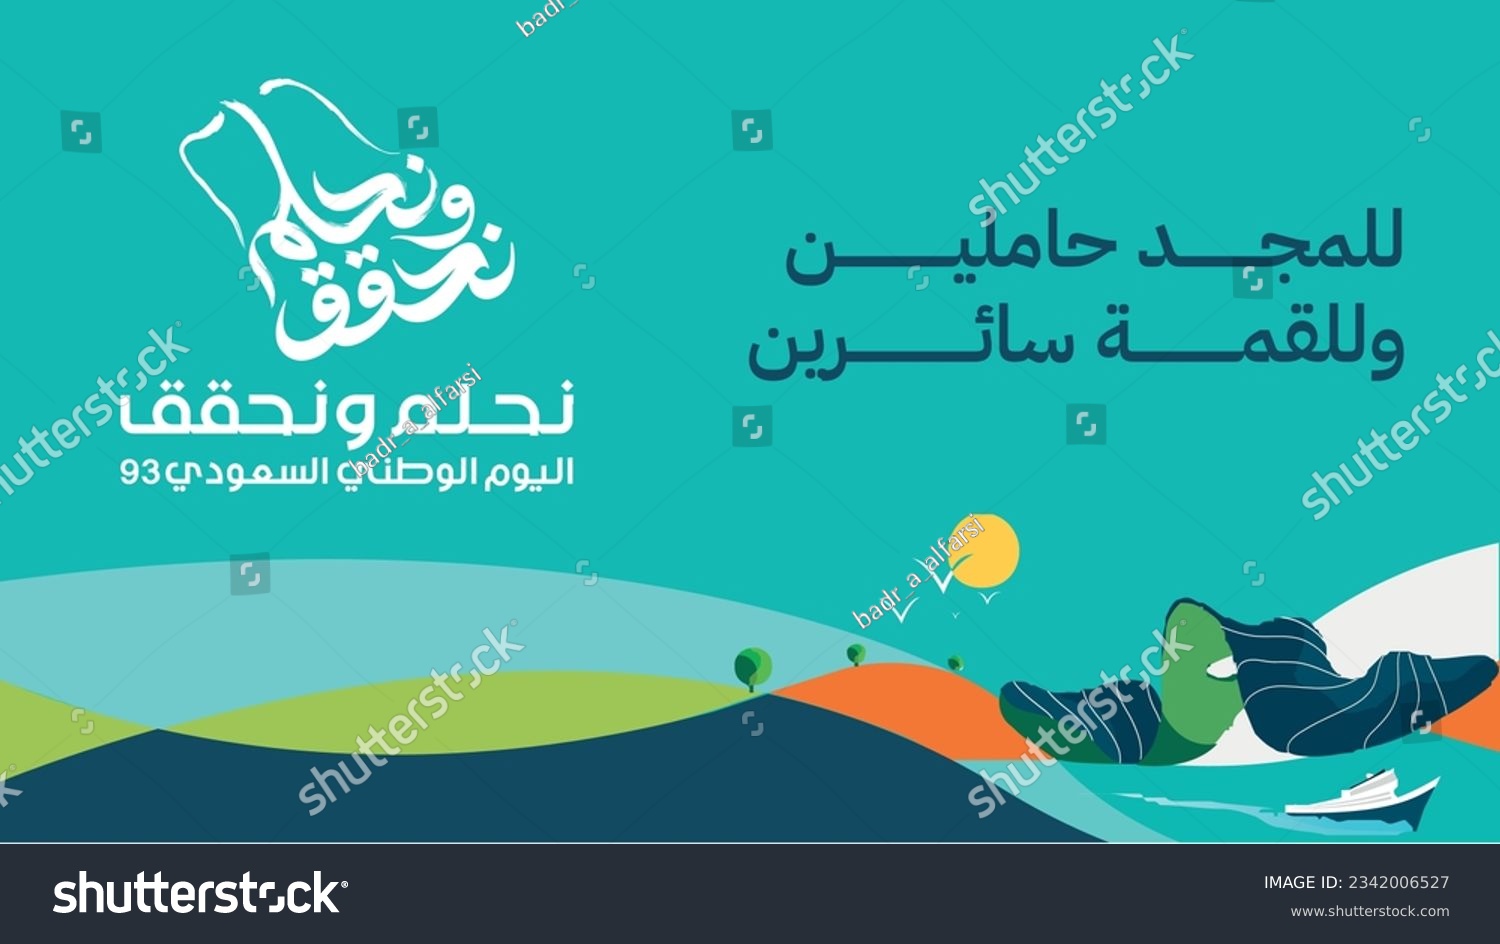 Saudi National Day 93, (Translation of arabic text : Saudi National Day 93) #2342006527